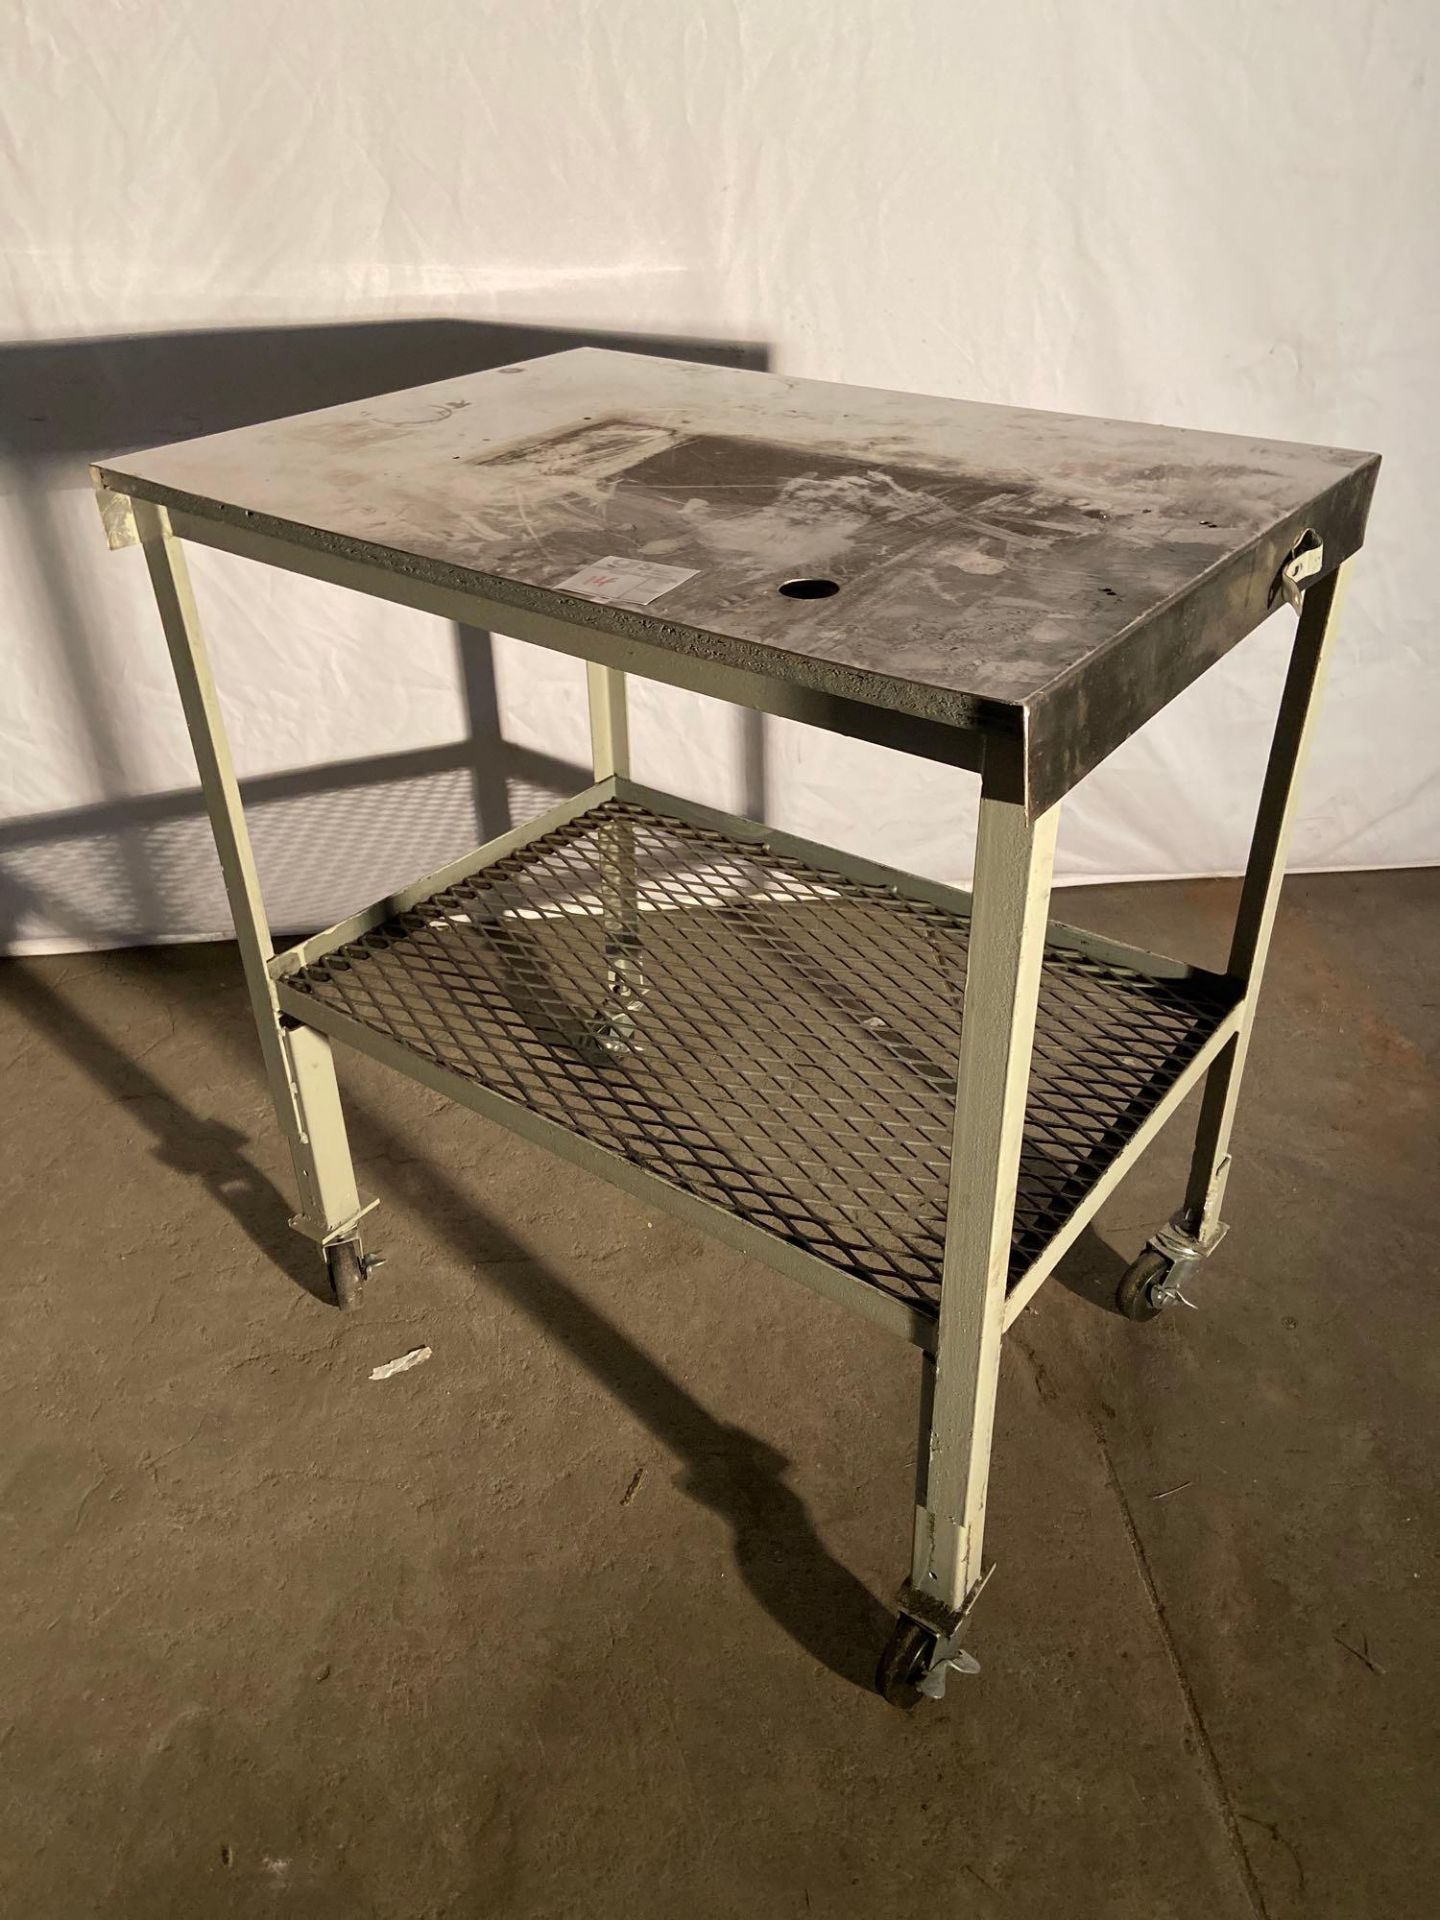 Stainless Steel Cart w/ Undershelf - Image 3 of 4